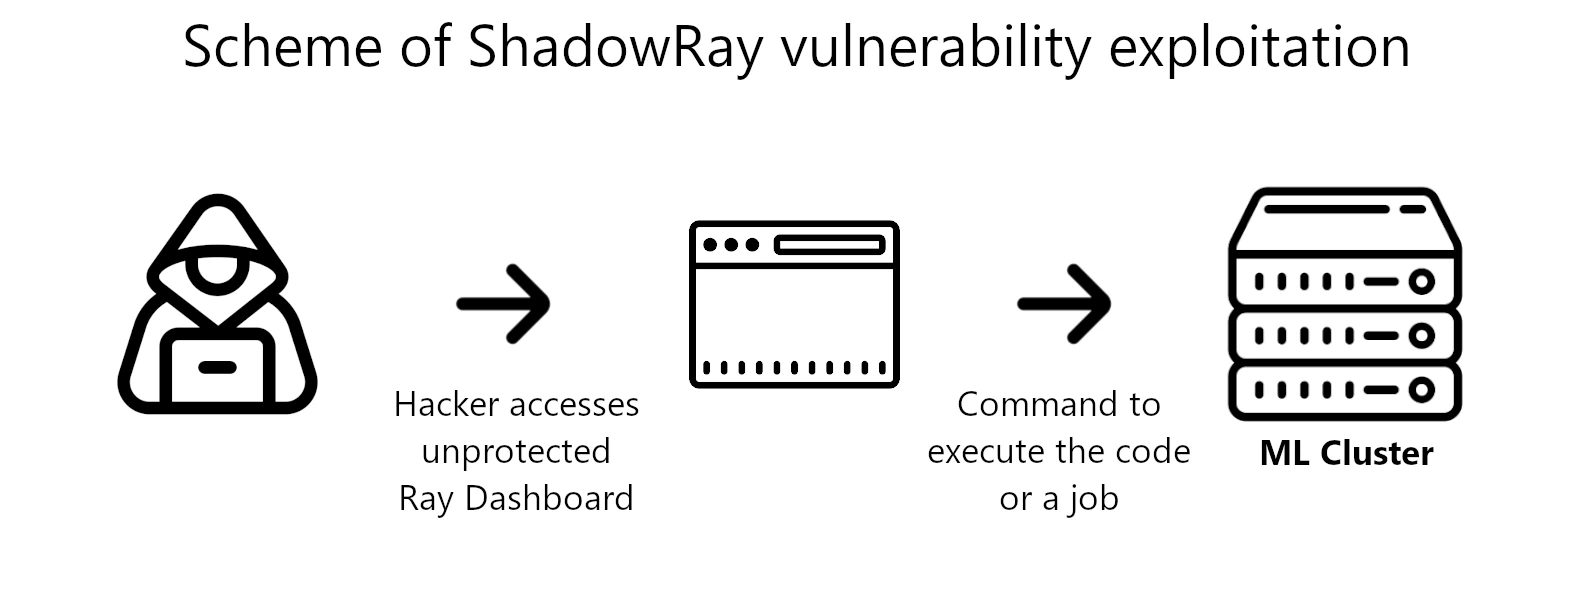 Esquema de explotación de vulnerabilidades de ShadowRay